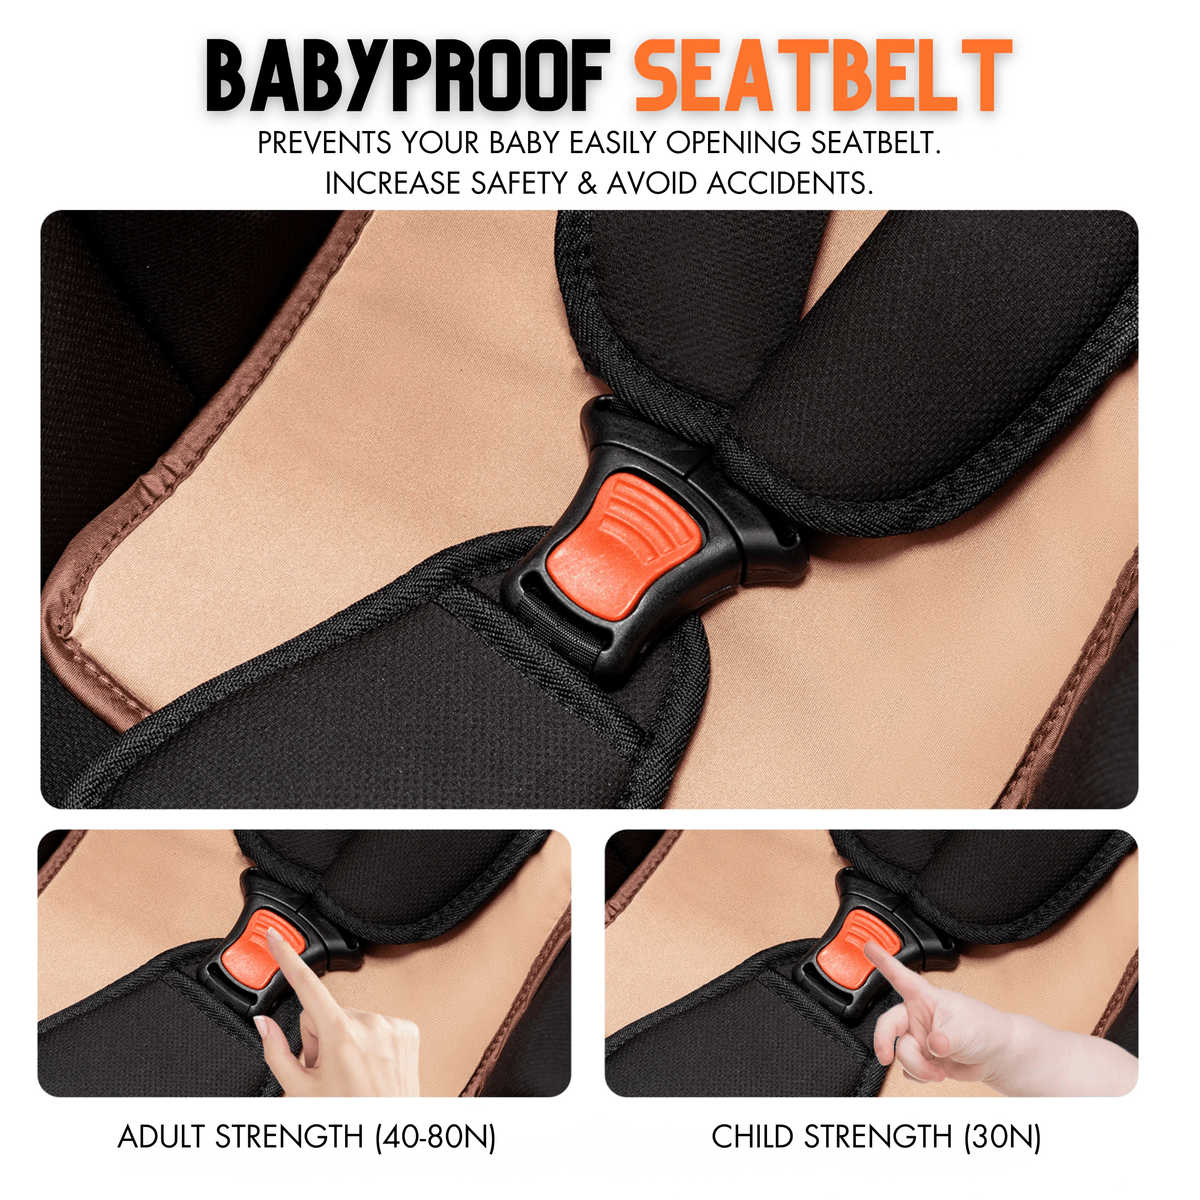 Babyproof seatbelt